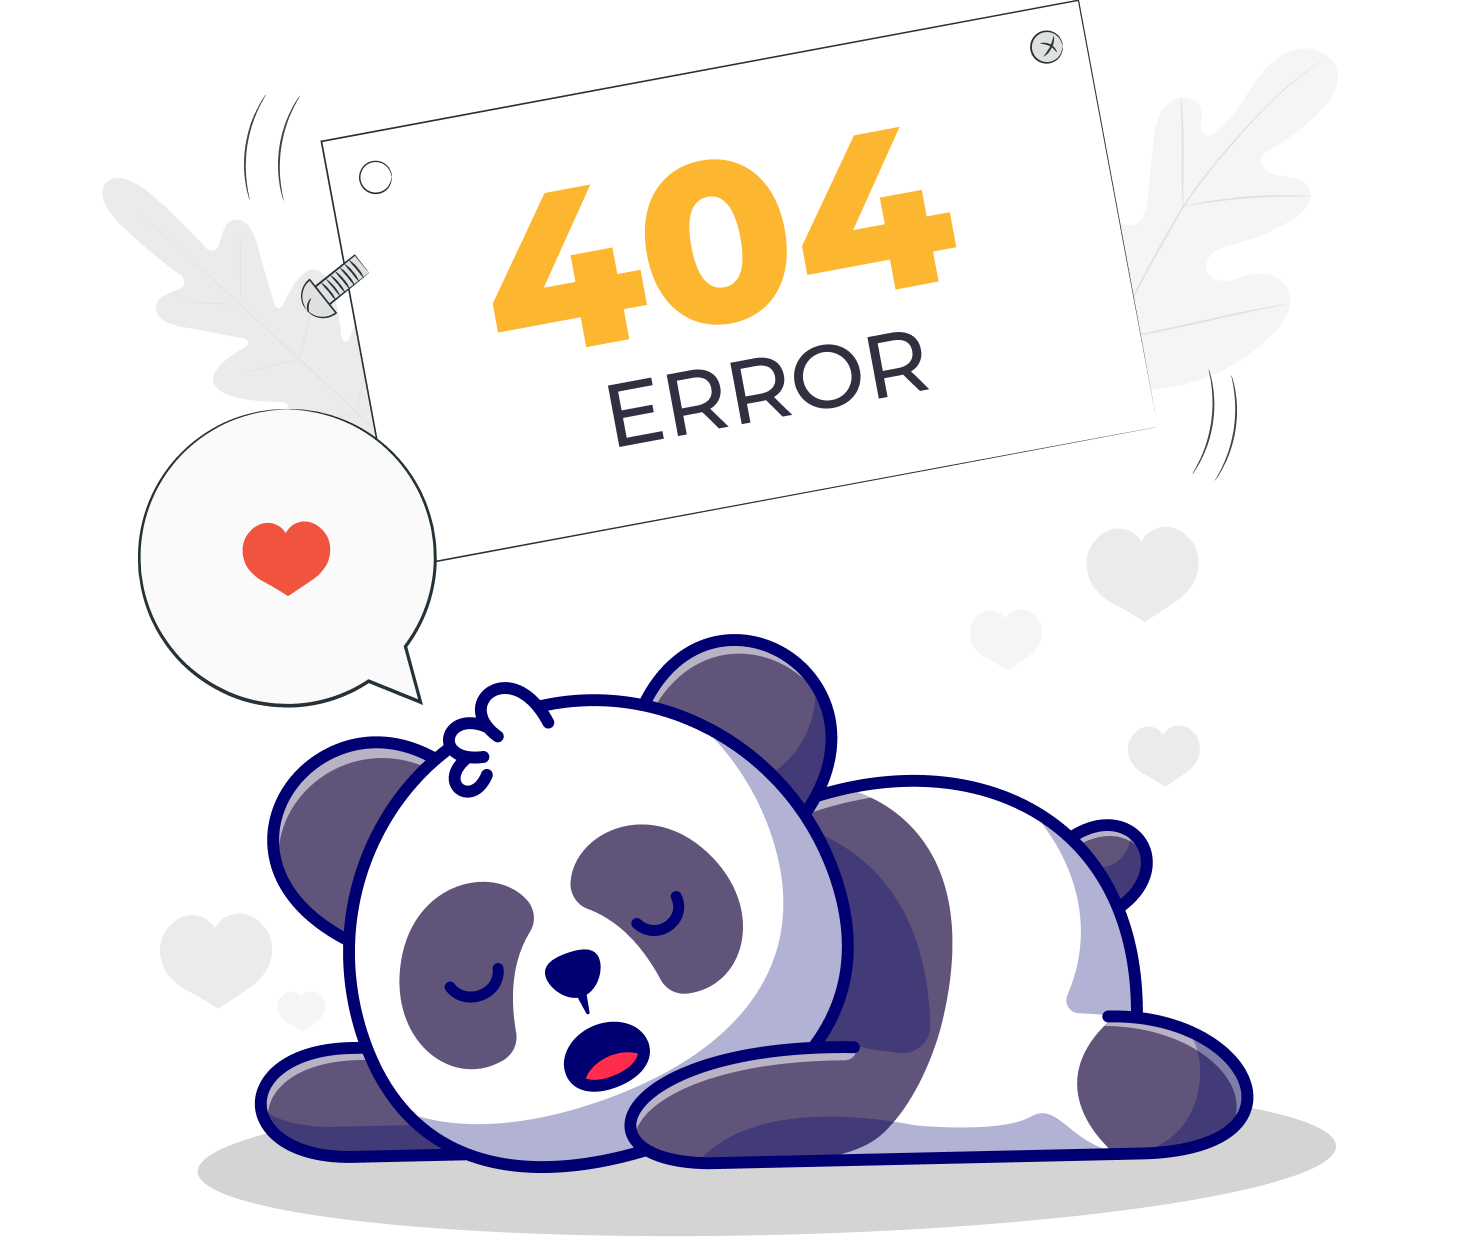 nerede izlenir 404 error